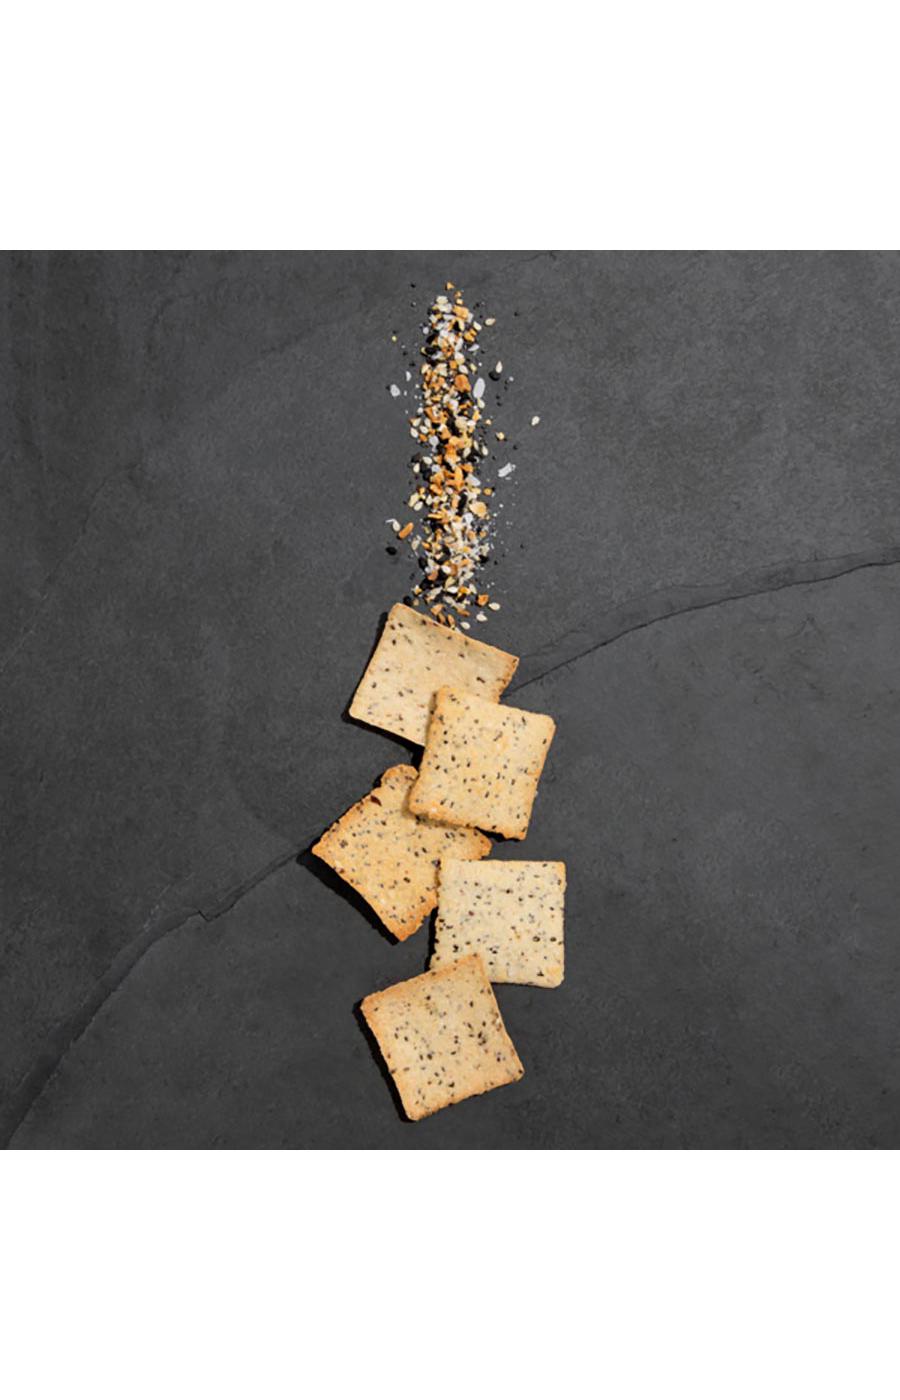 Hu Grain Free Everything Crackers; image 2 of 4